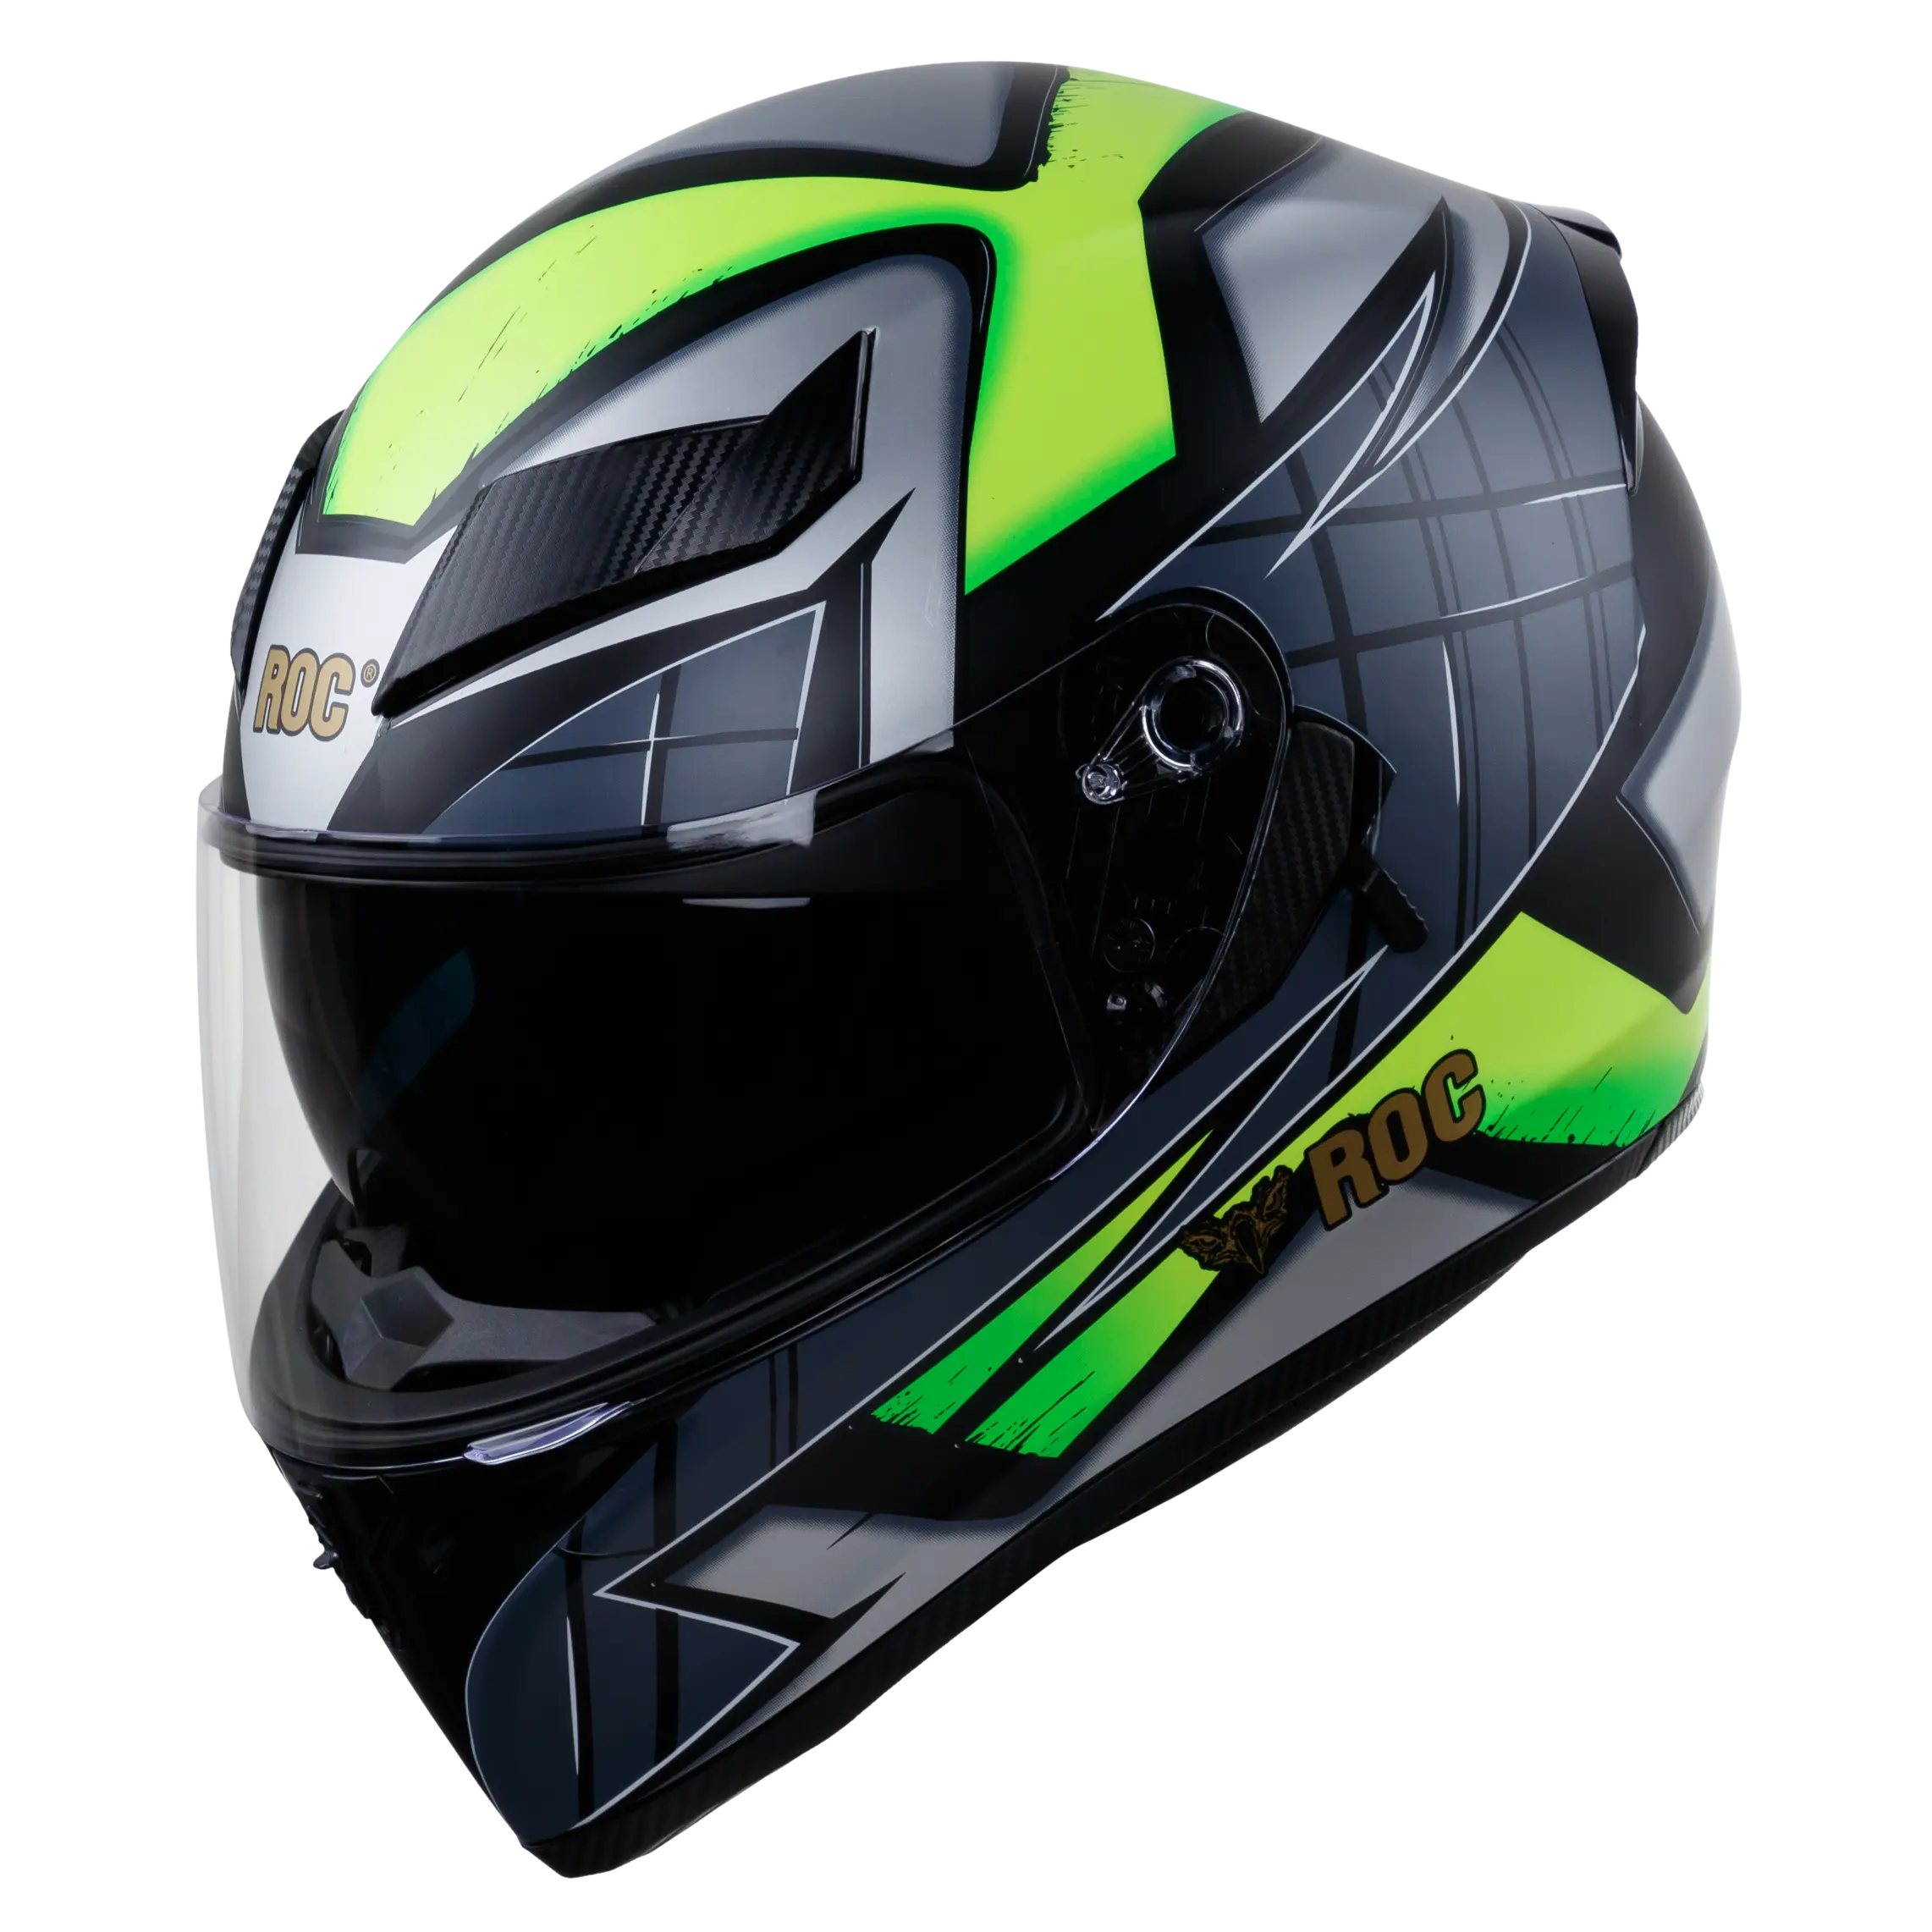 Casco de motocicleta de cara completa OEM de precio competitivo R05 ROYAL ABS avanzado con visera con cascos DOT para motocicleta de hombre